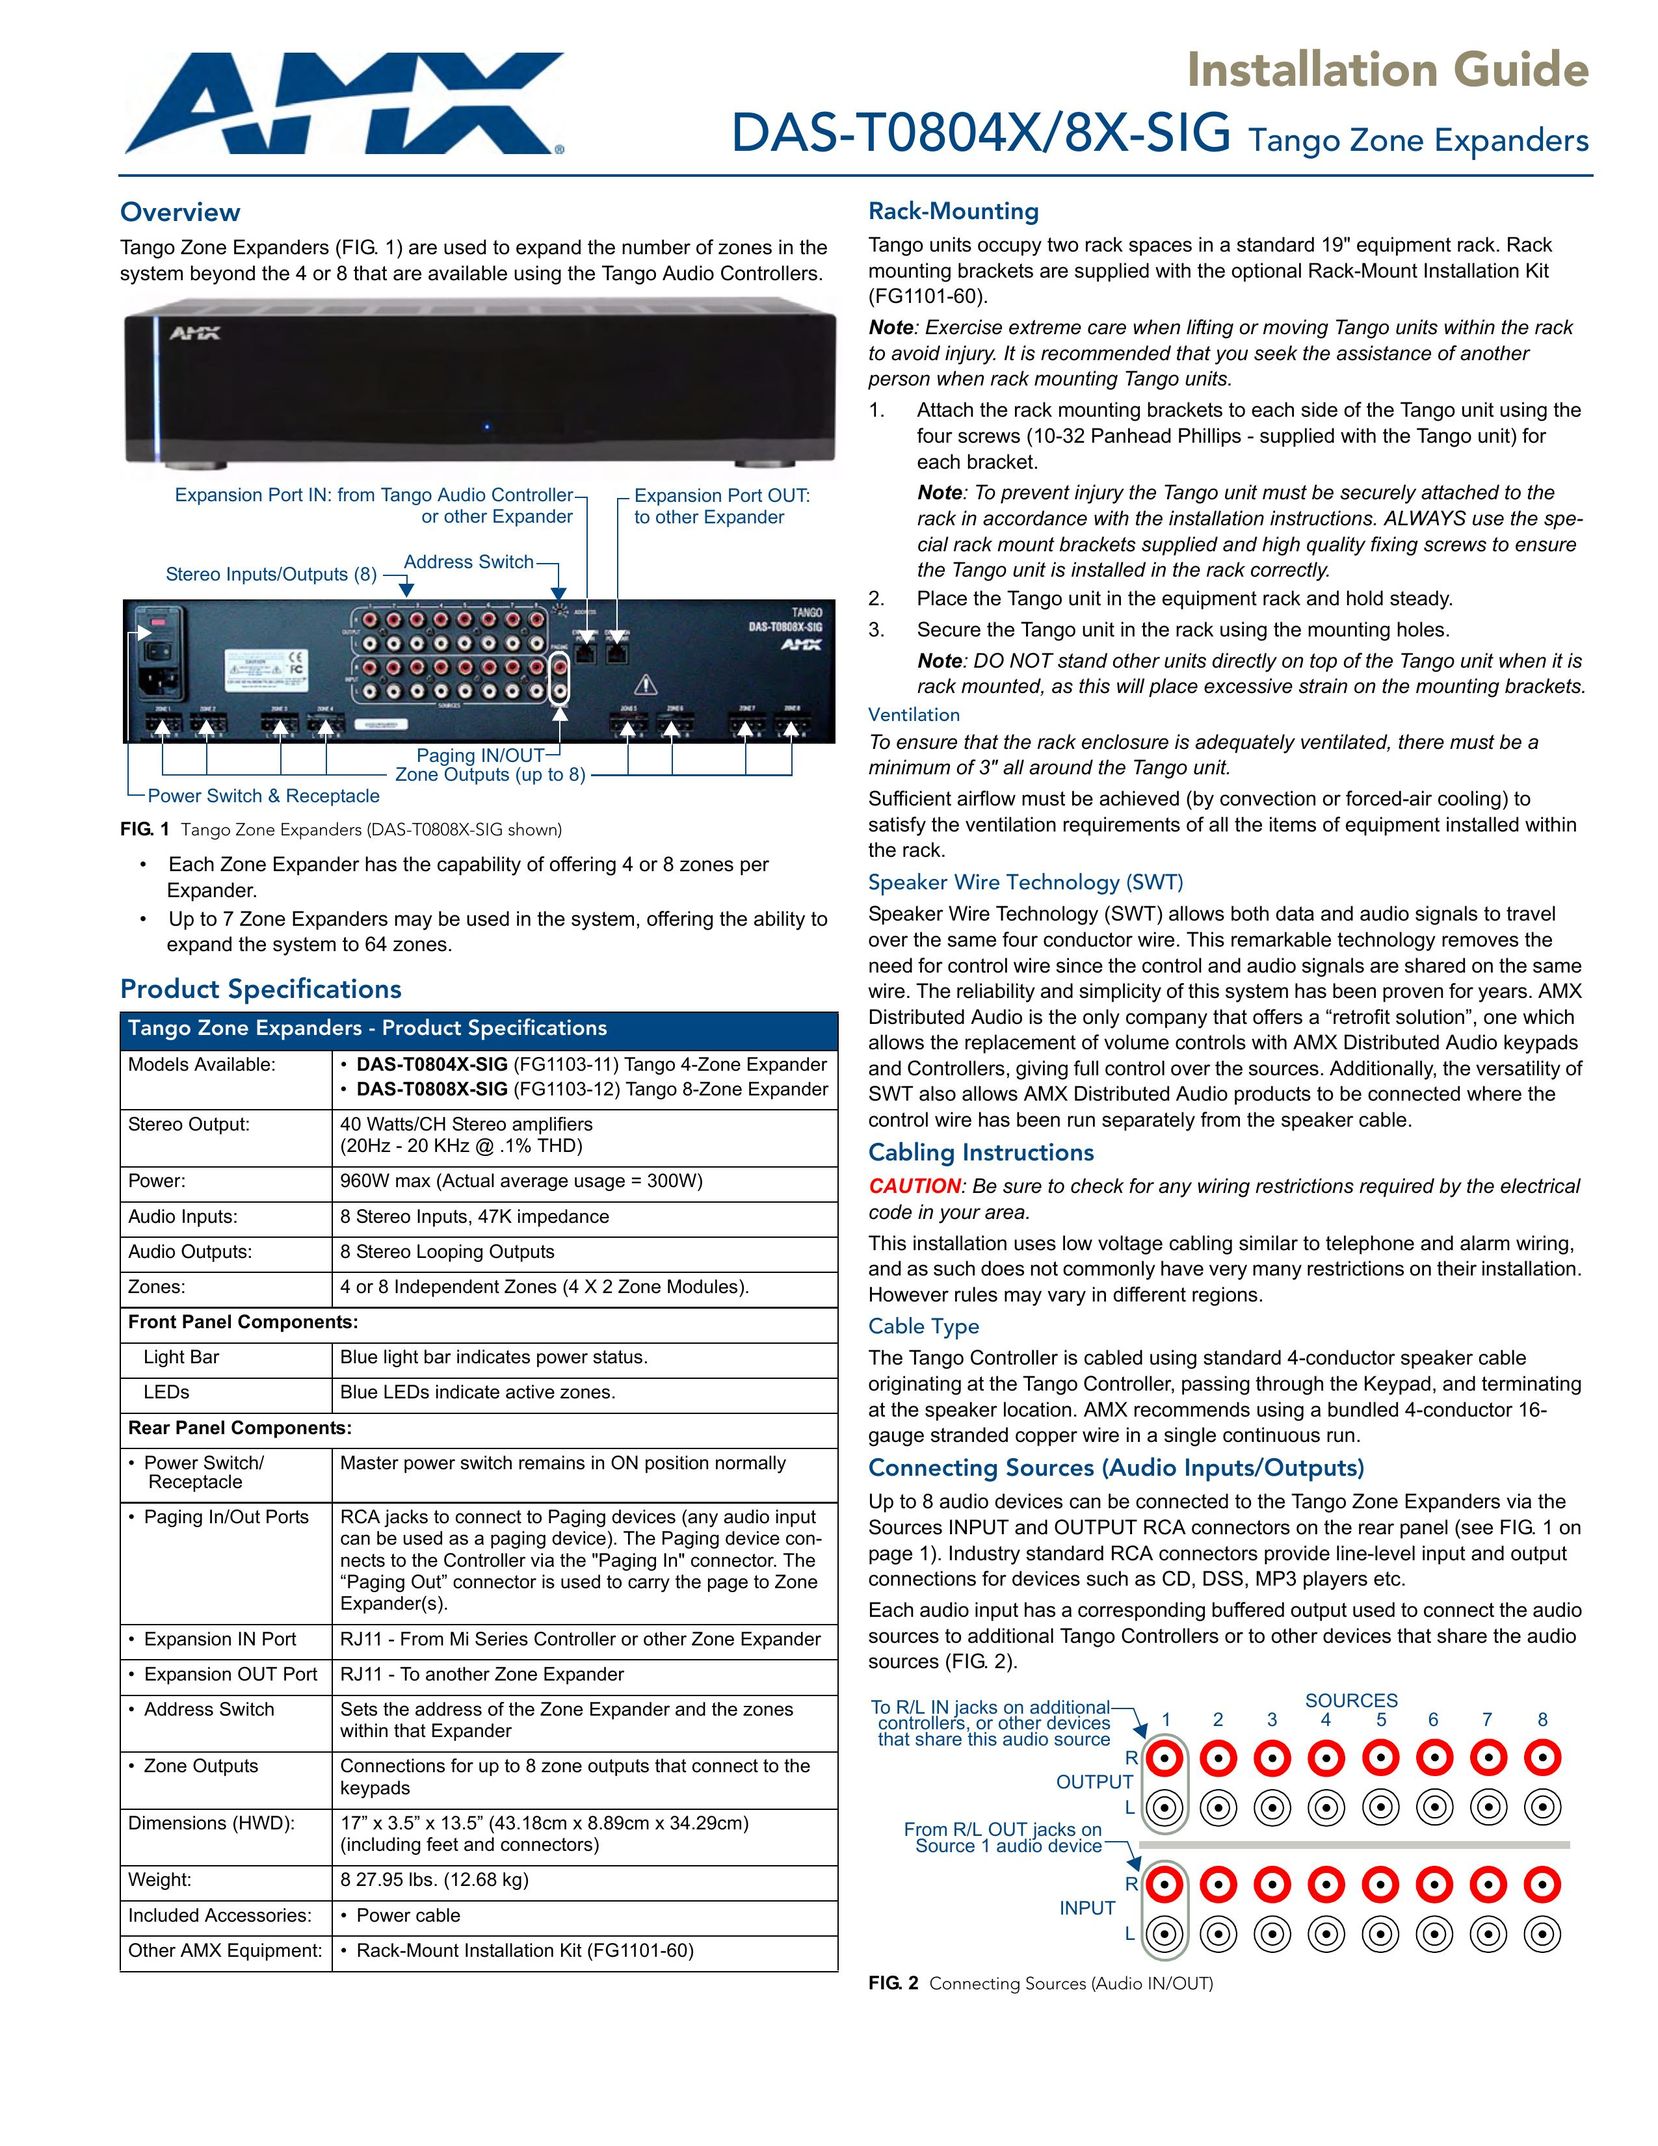 AMX DAS-T0804X/8X-SIG Stereo Receiver User Manual